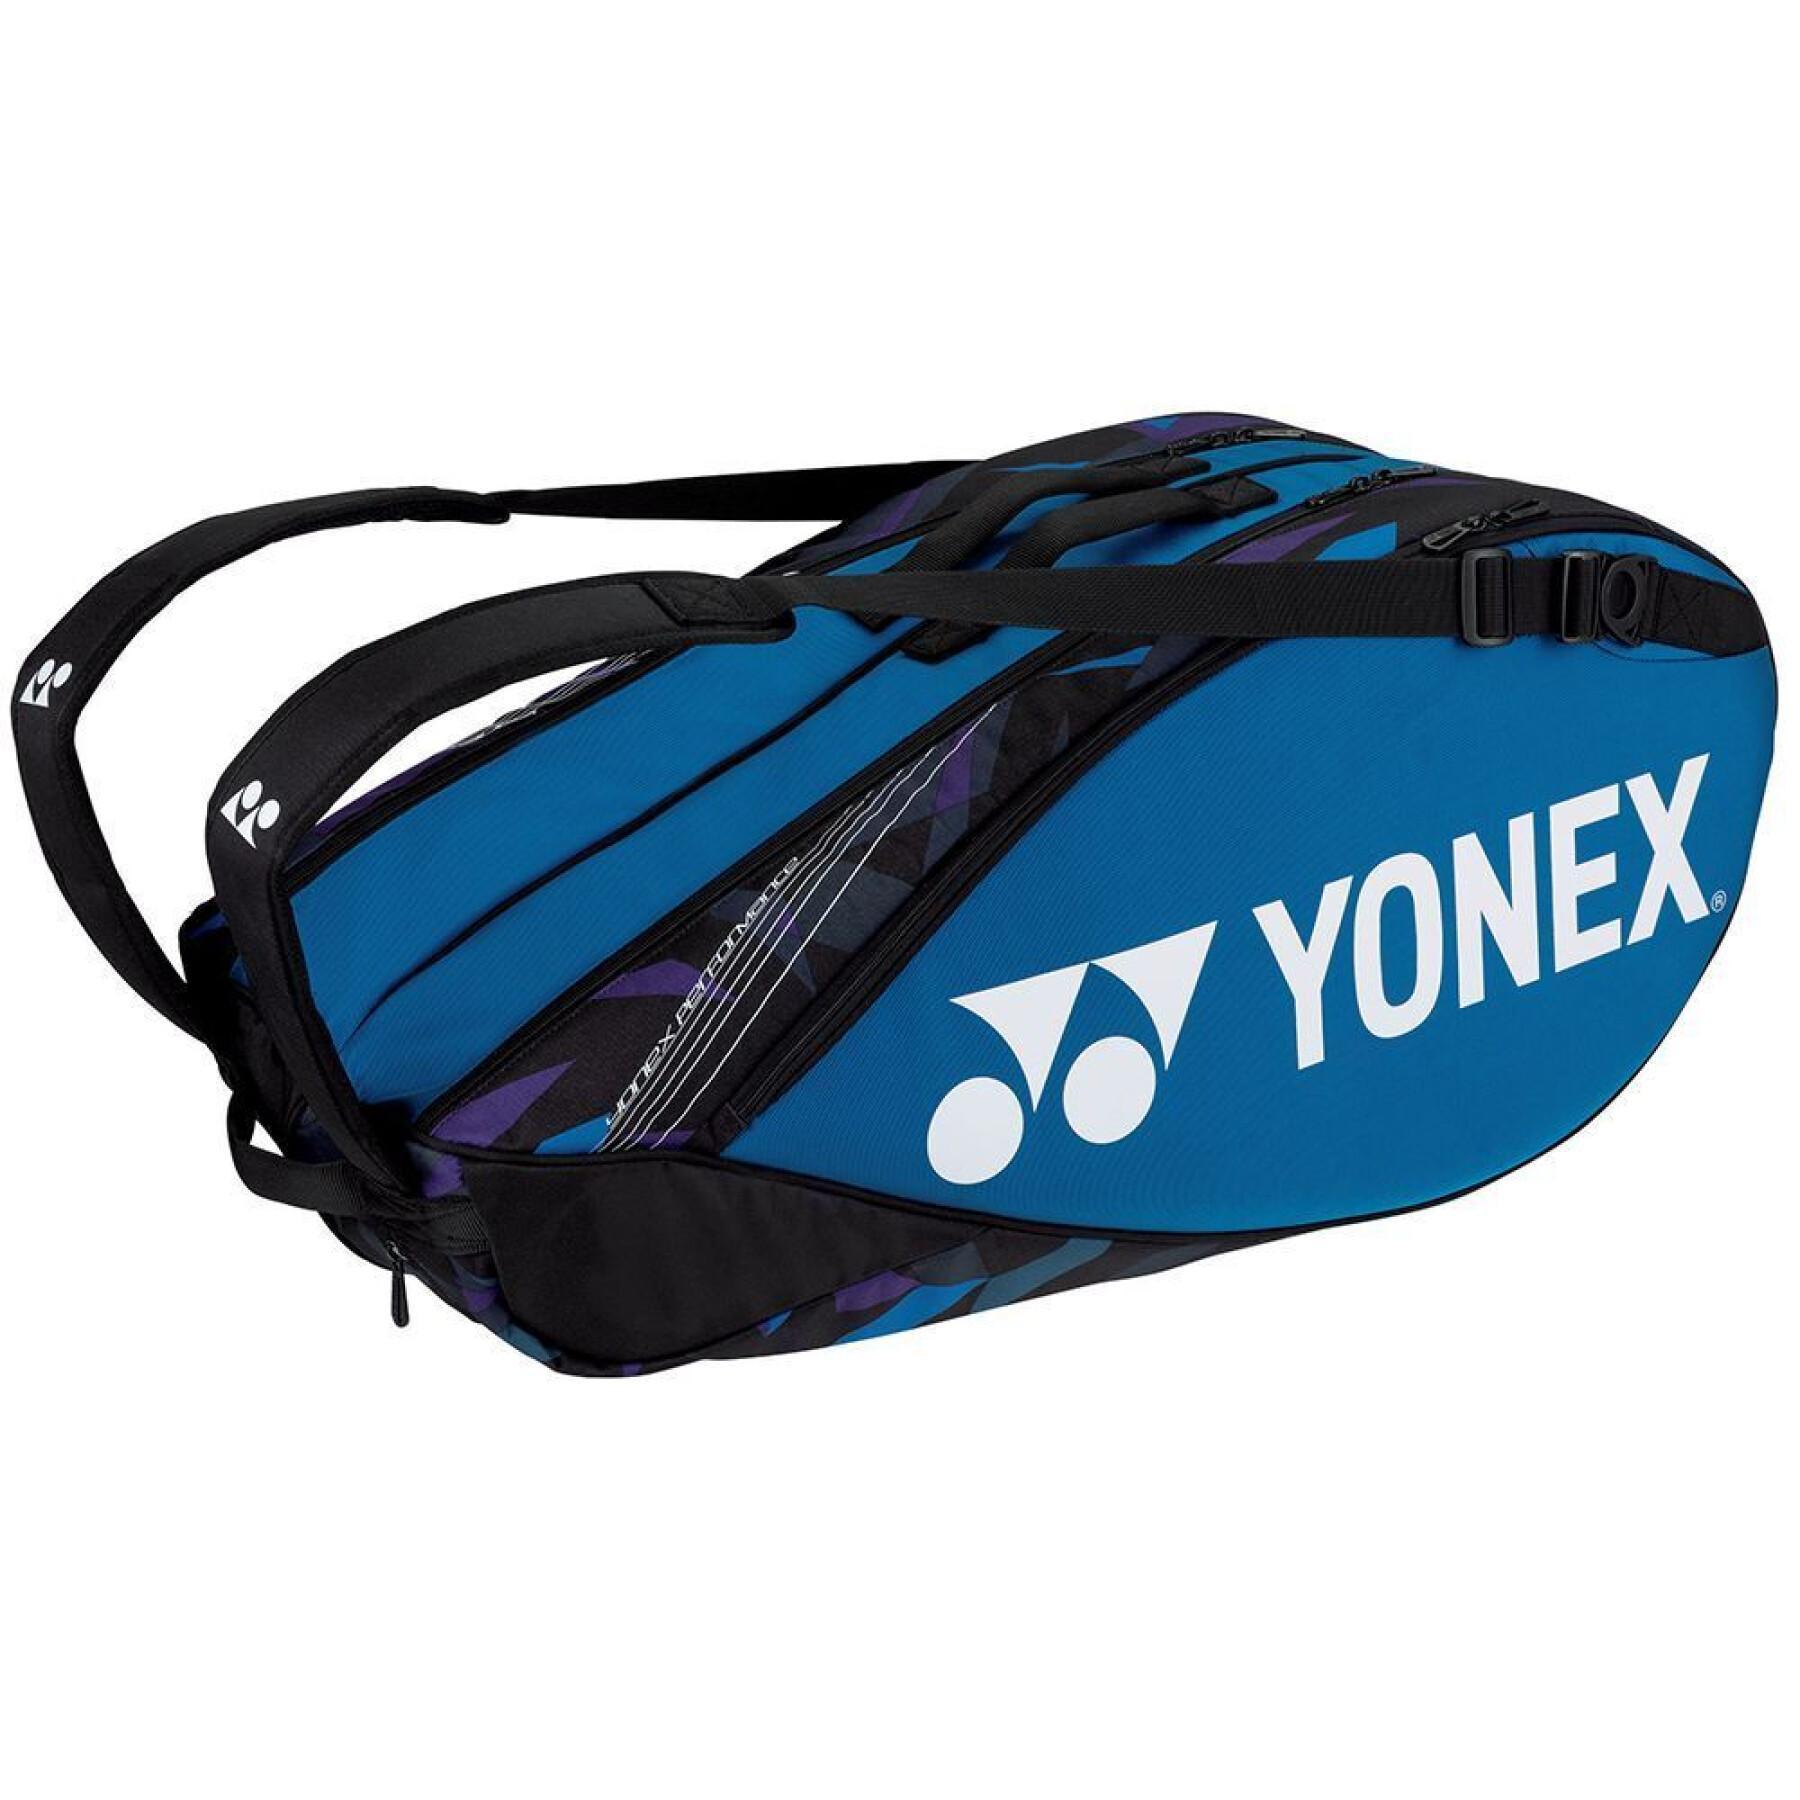 Badminton racket bag Yonex Pro 92226